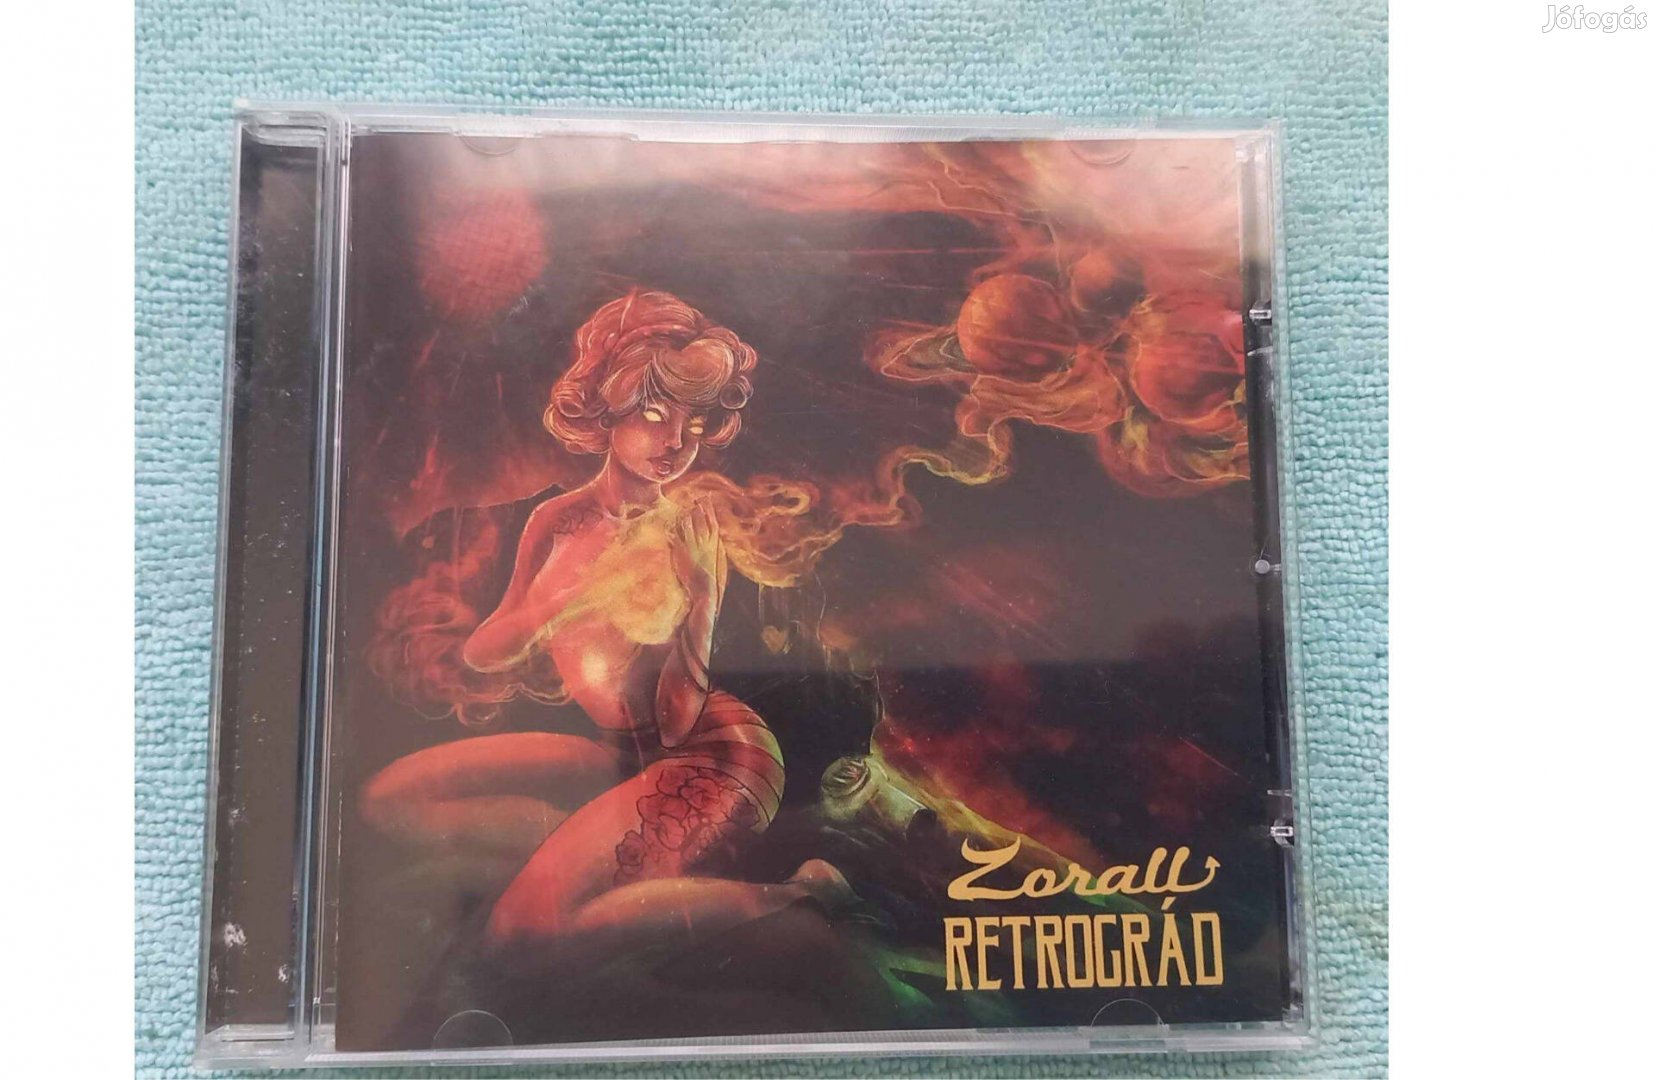 Zorall - Retrográd CD (2016)